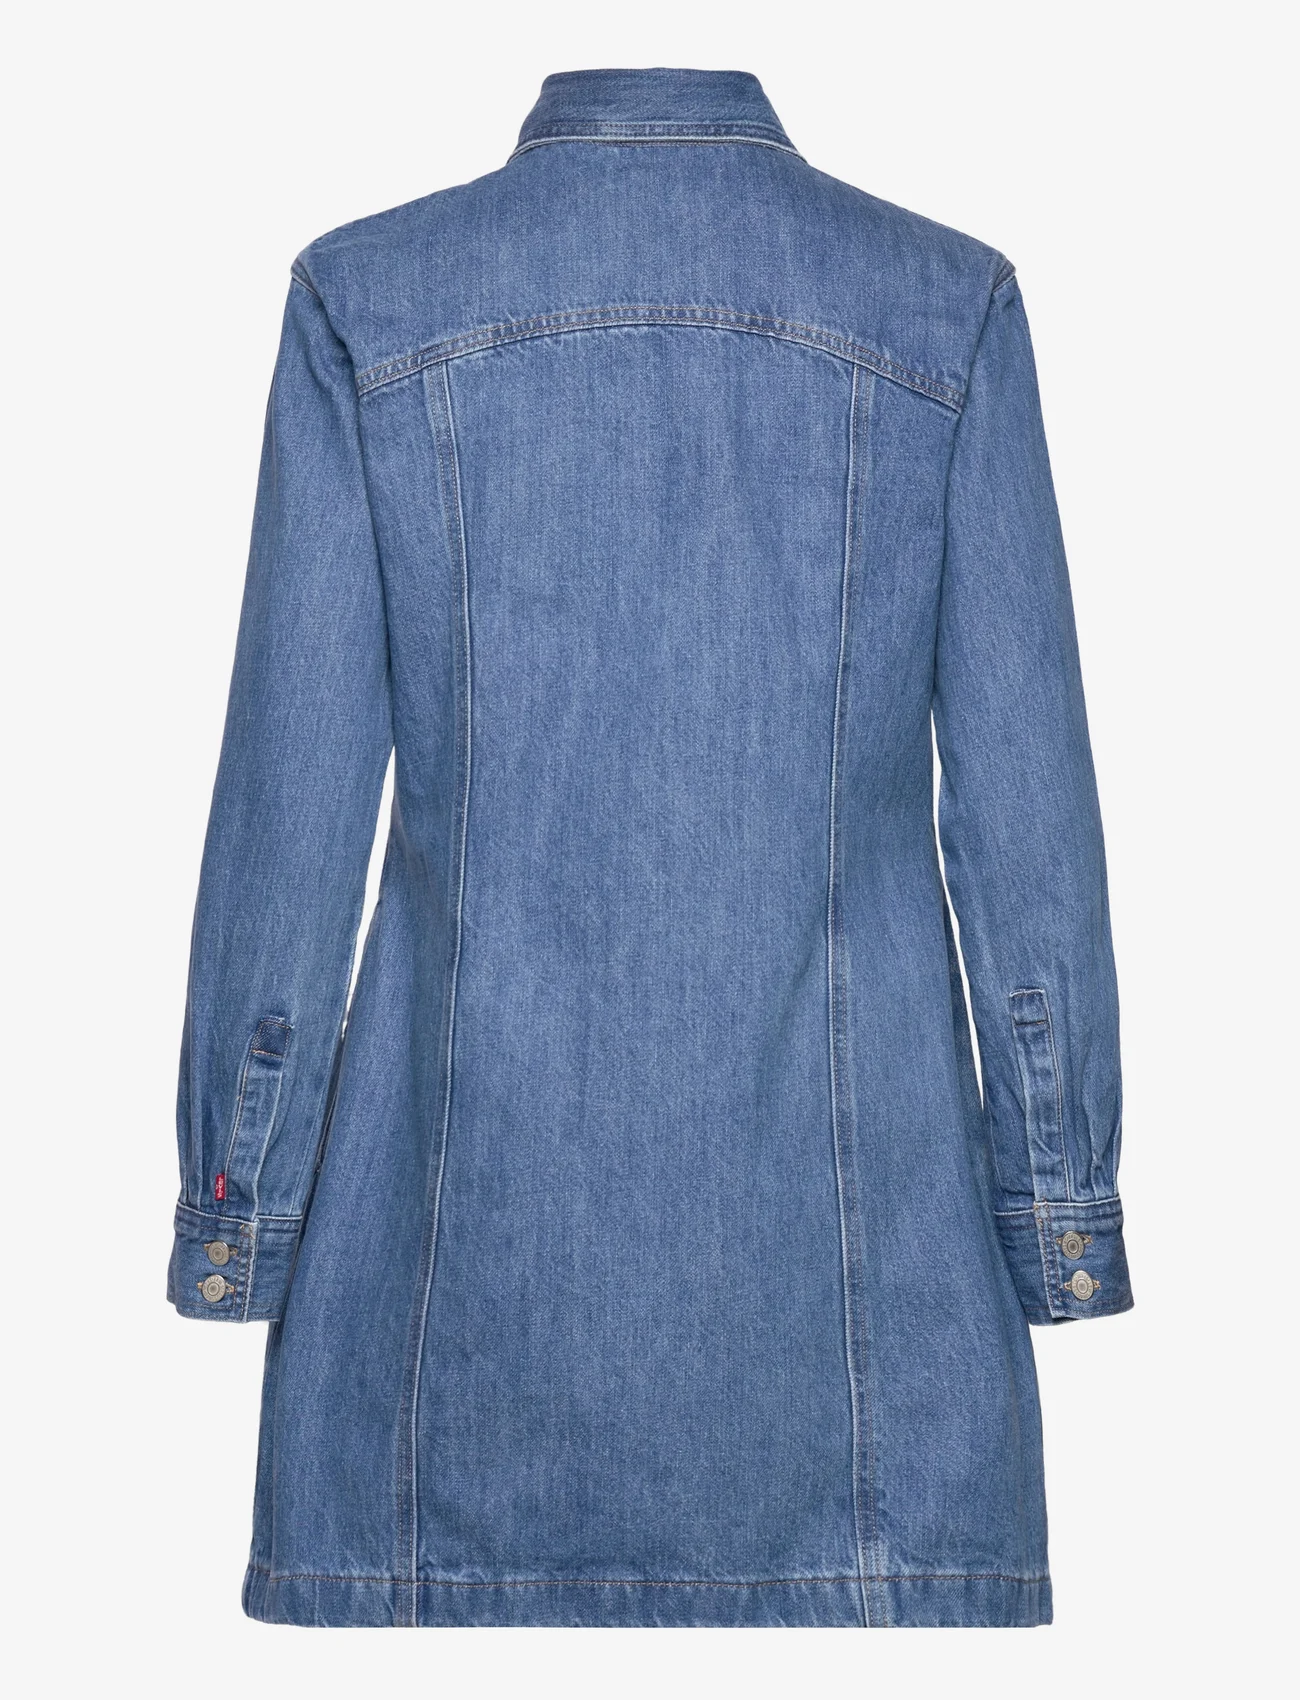 LEVI´S Women - SHAY DENIM DRESS OLD 517 BLUE - sukienki dżinsowe - light indigo - worn in - 1